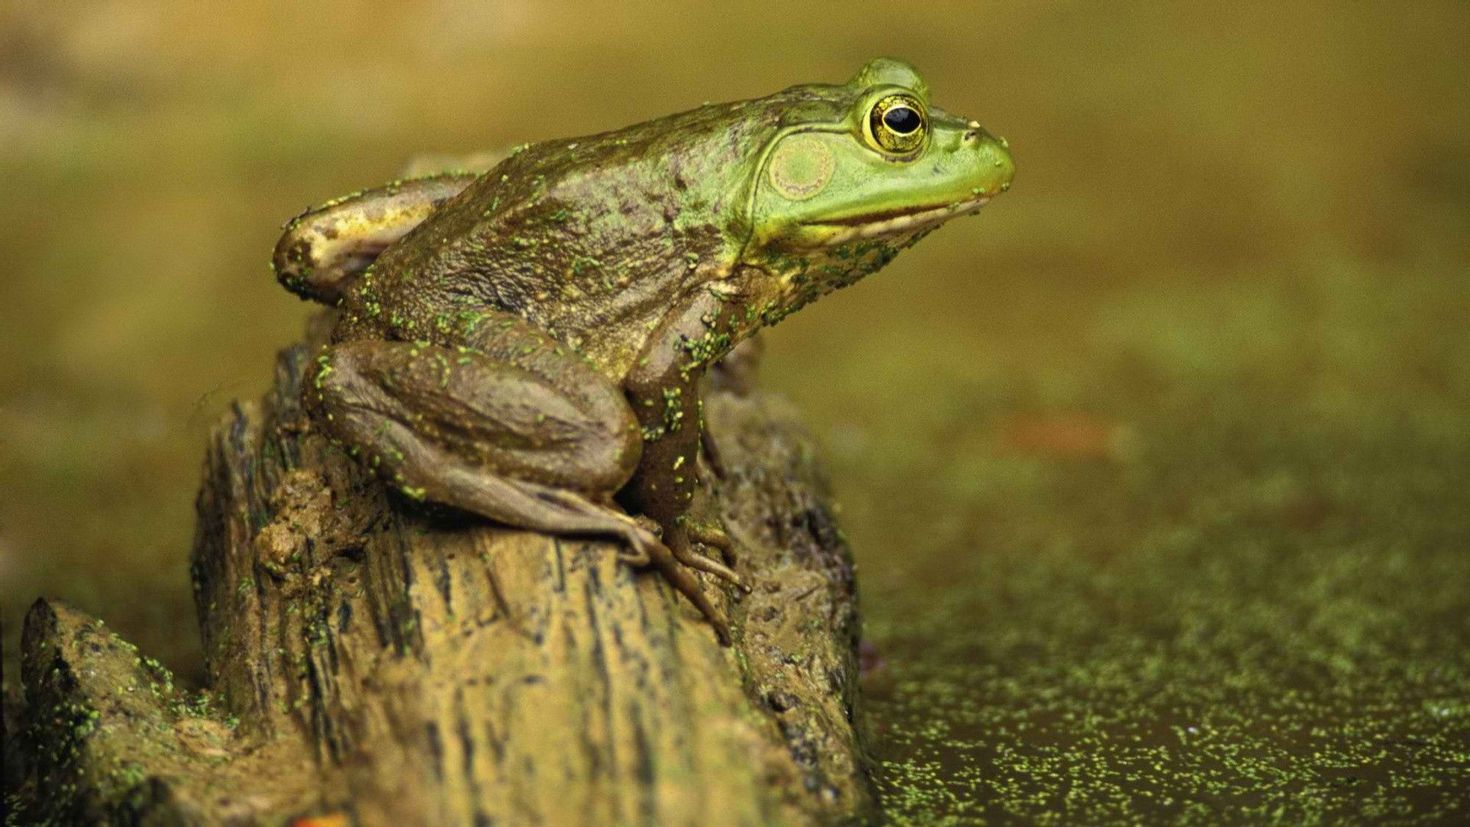 Elephant frog. Лягушка Болотная. Зеленушка лягушка. Лягушка зеленая Болотная. Обыкновенная Болотная лягушка.